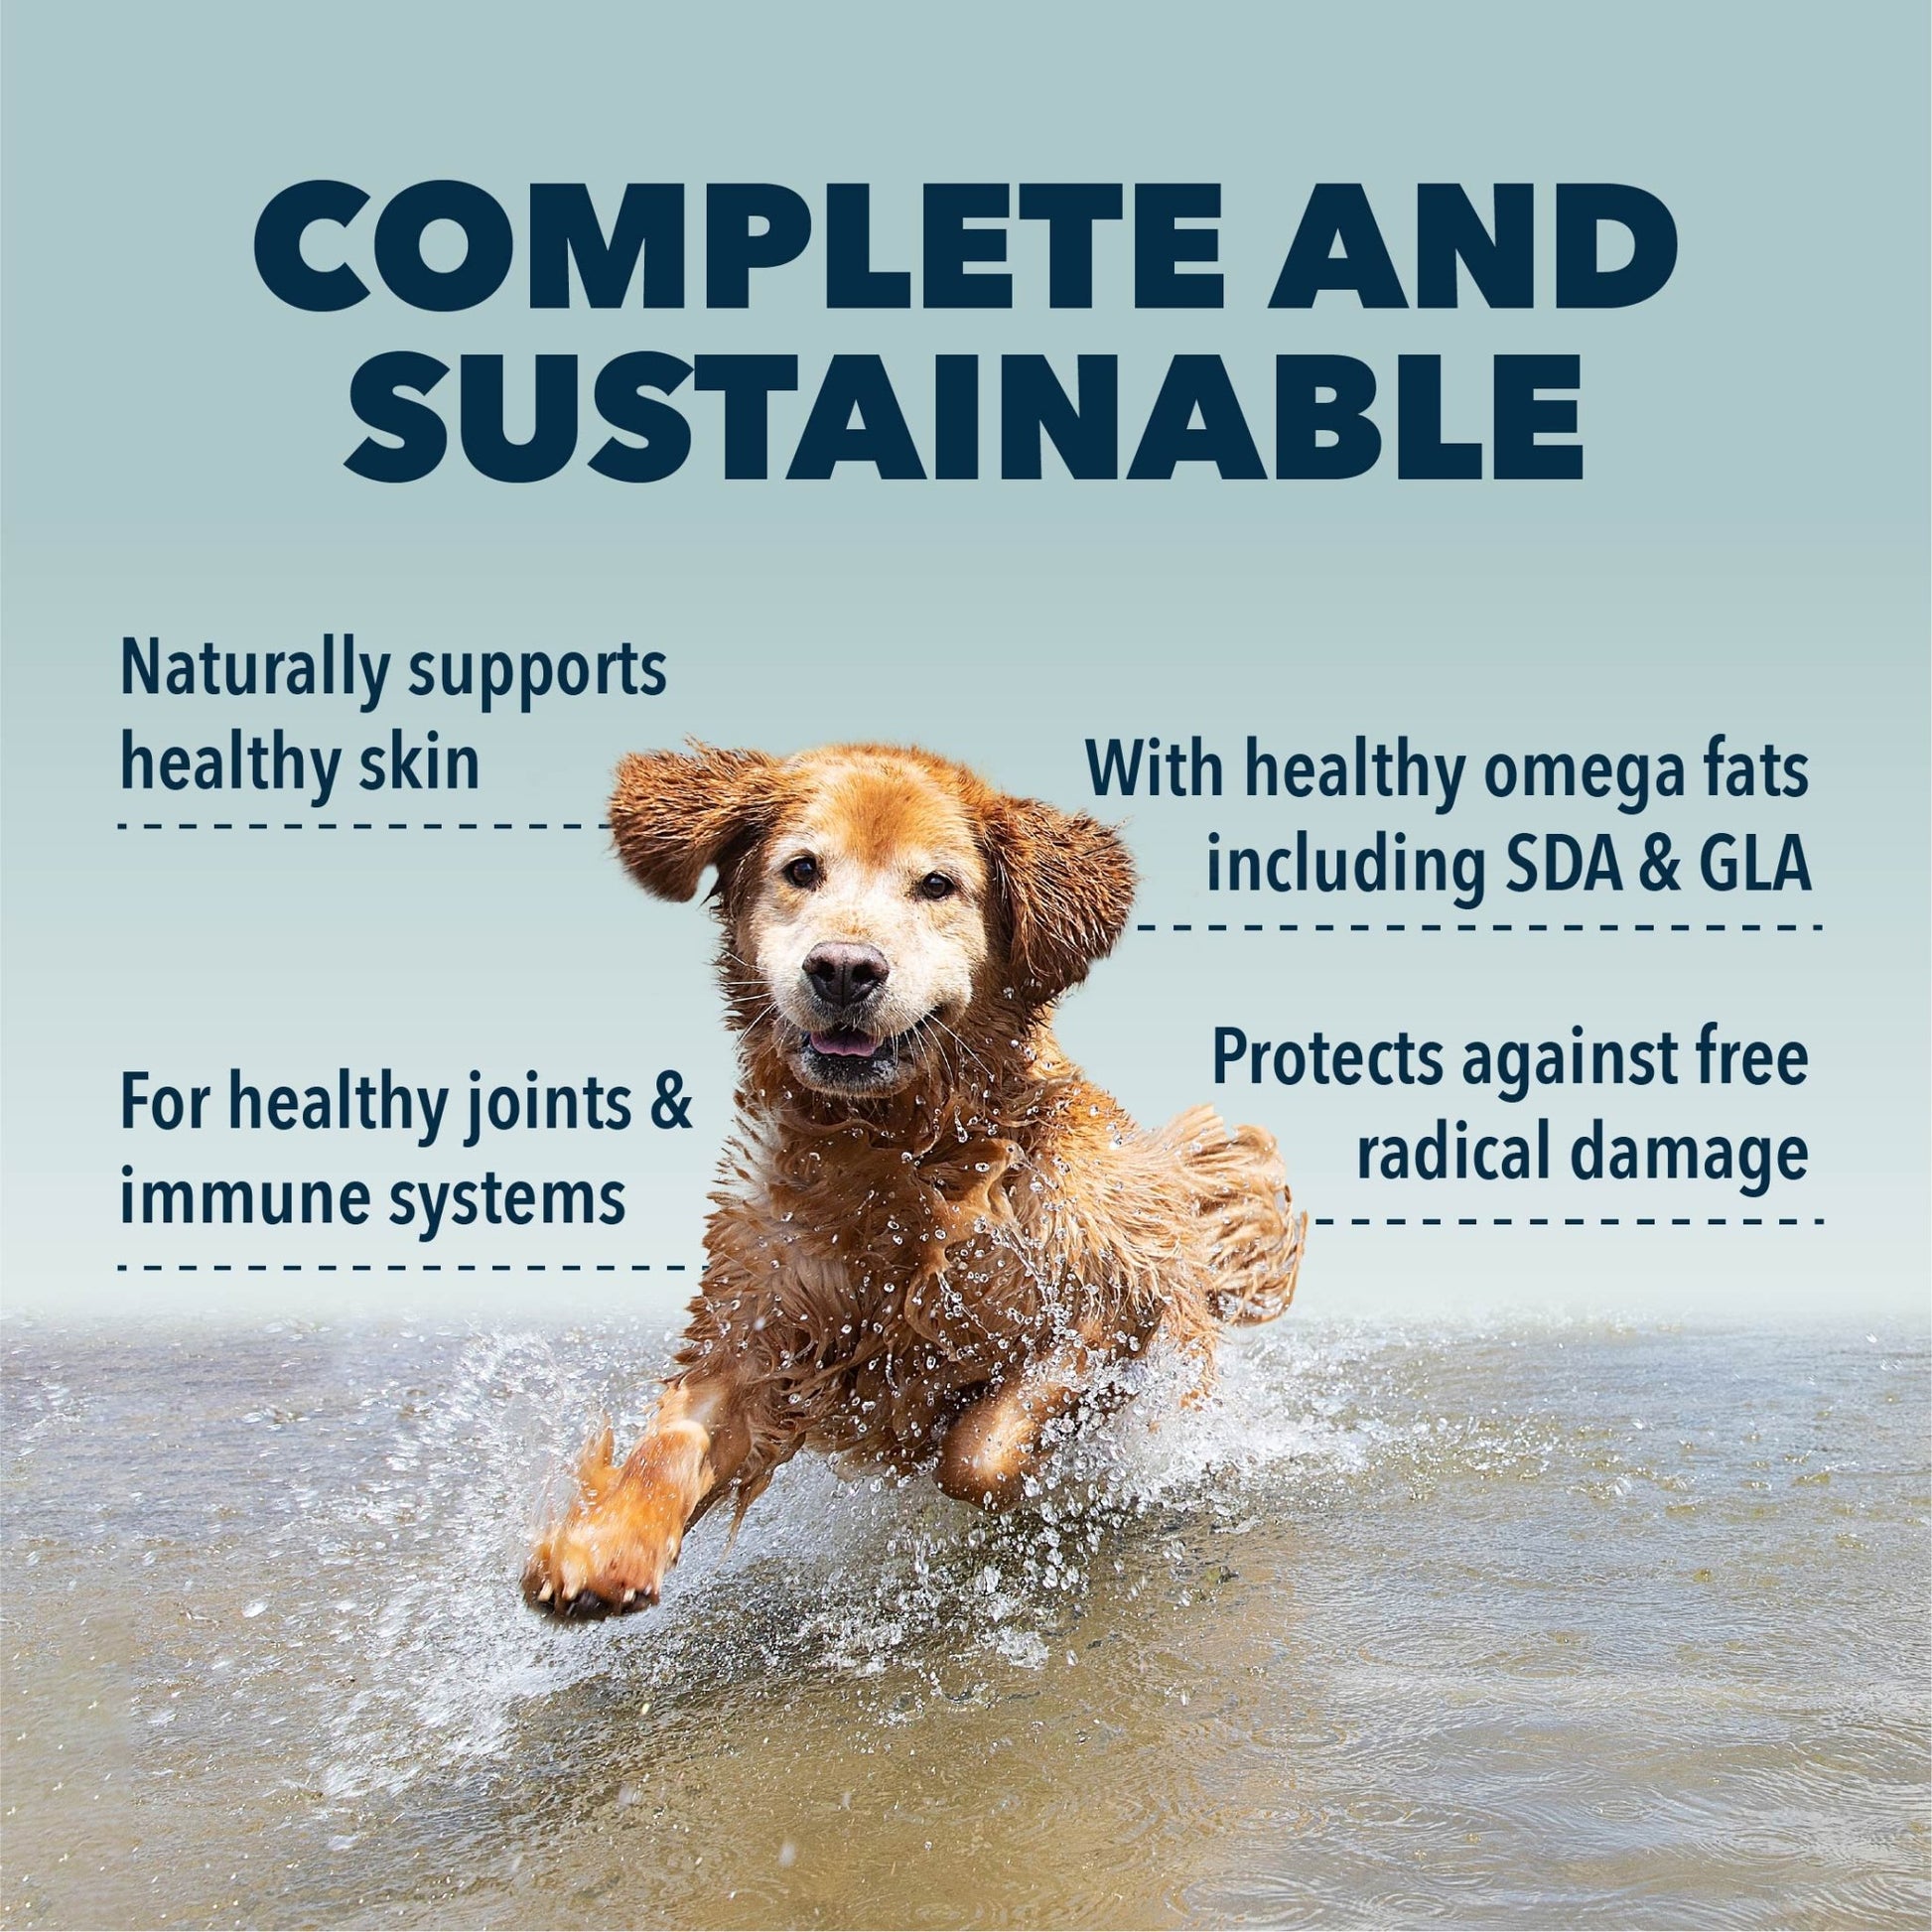 Four Leaf Rover Safe Sea Omega 3s - Happy Hounds Pet Supply